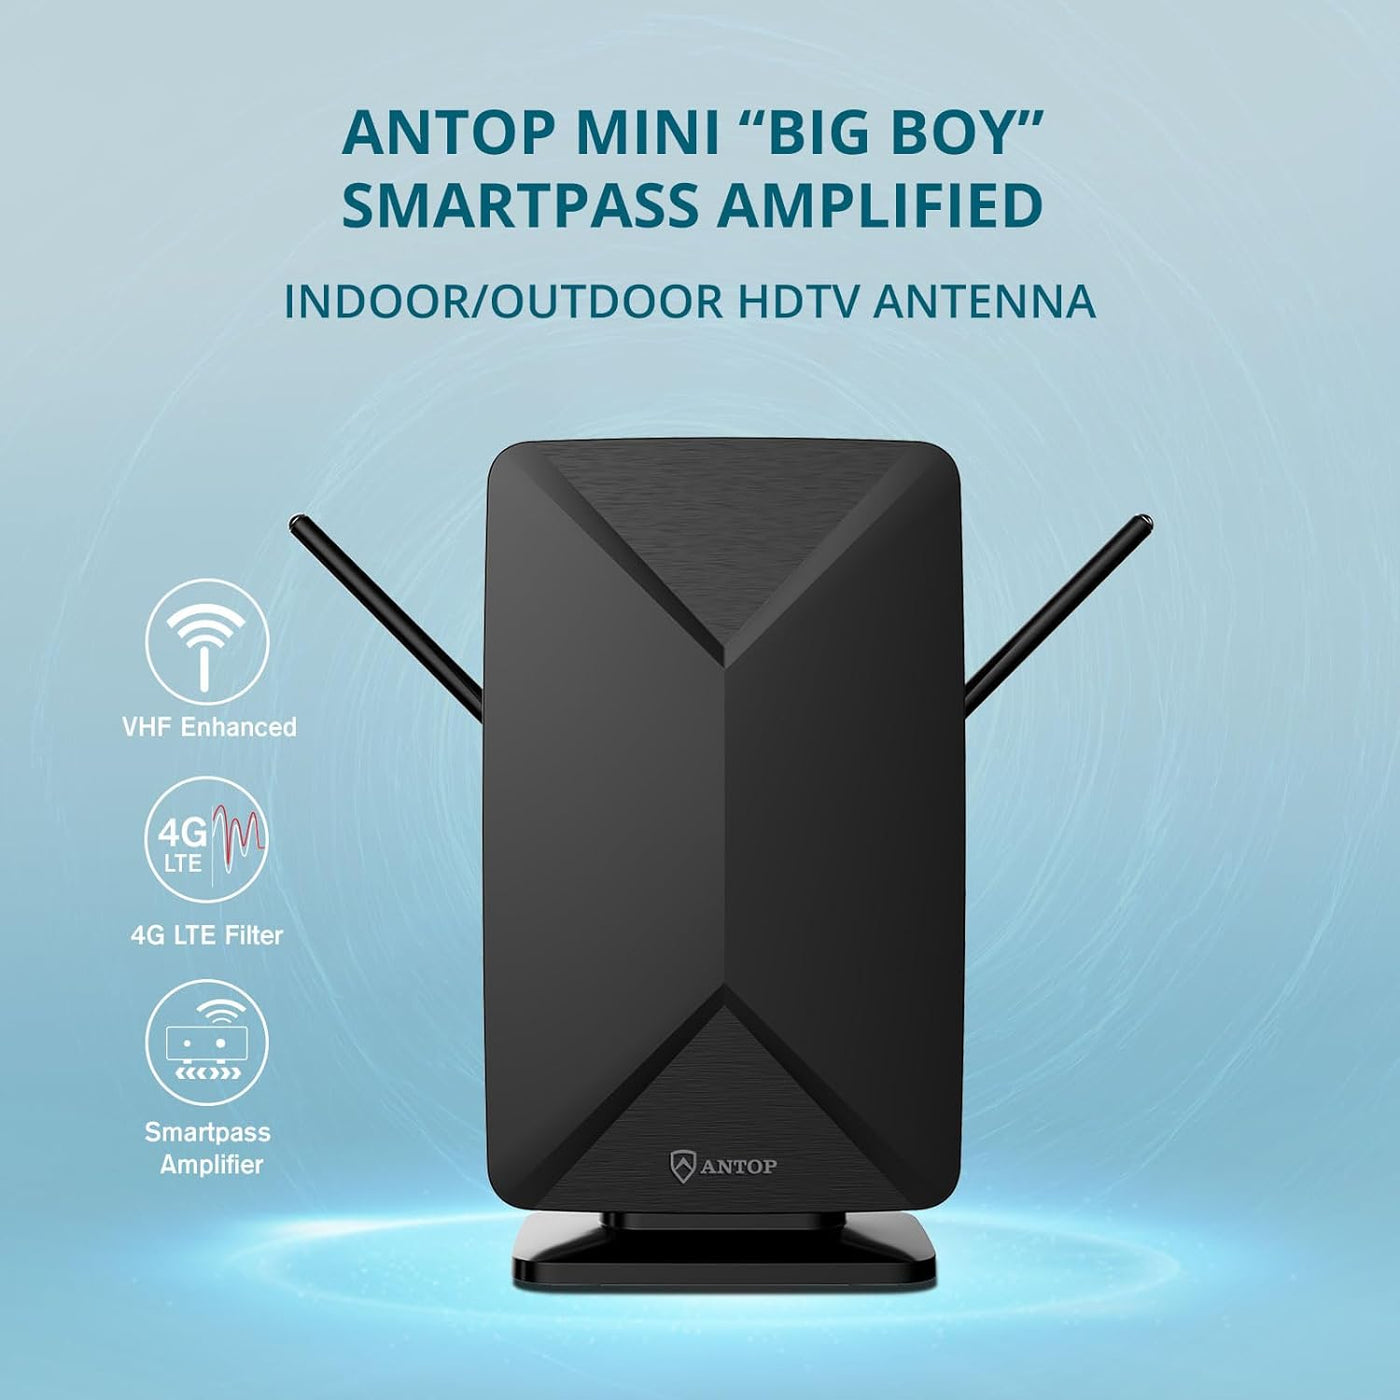 HD Antenna - ANTOP AT-406BV Flat Panel Mini Big Boy Indoor/Outdoor - $60